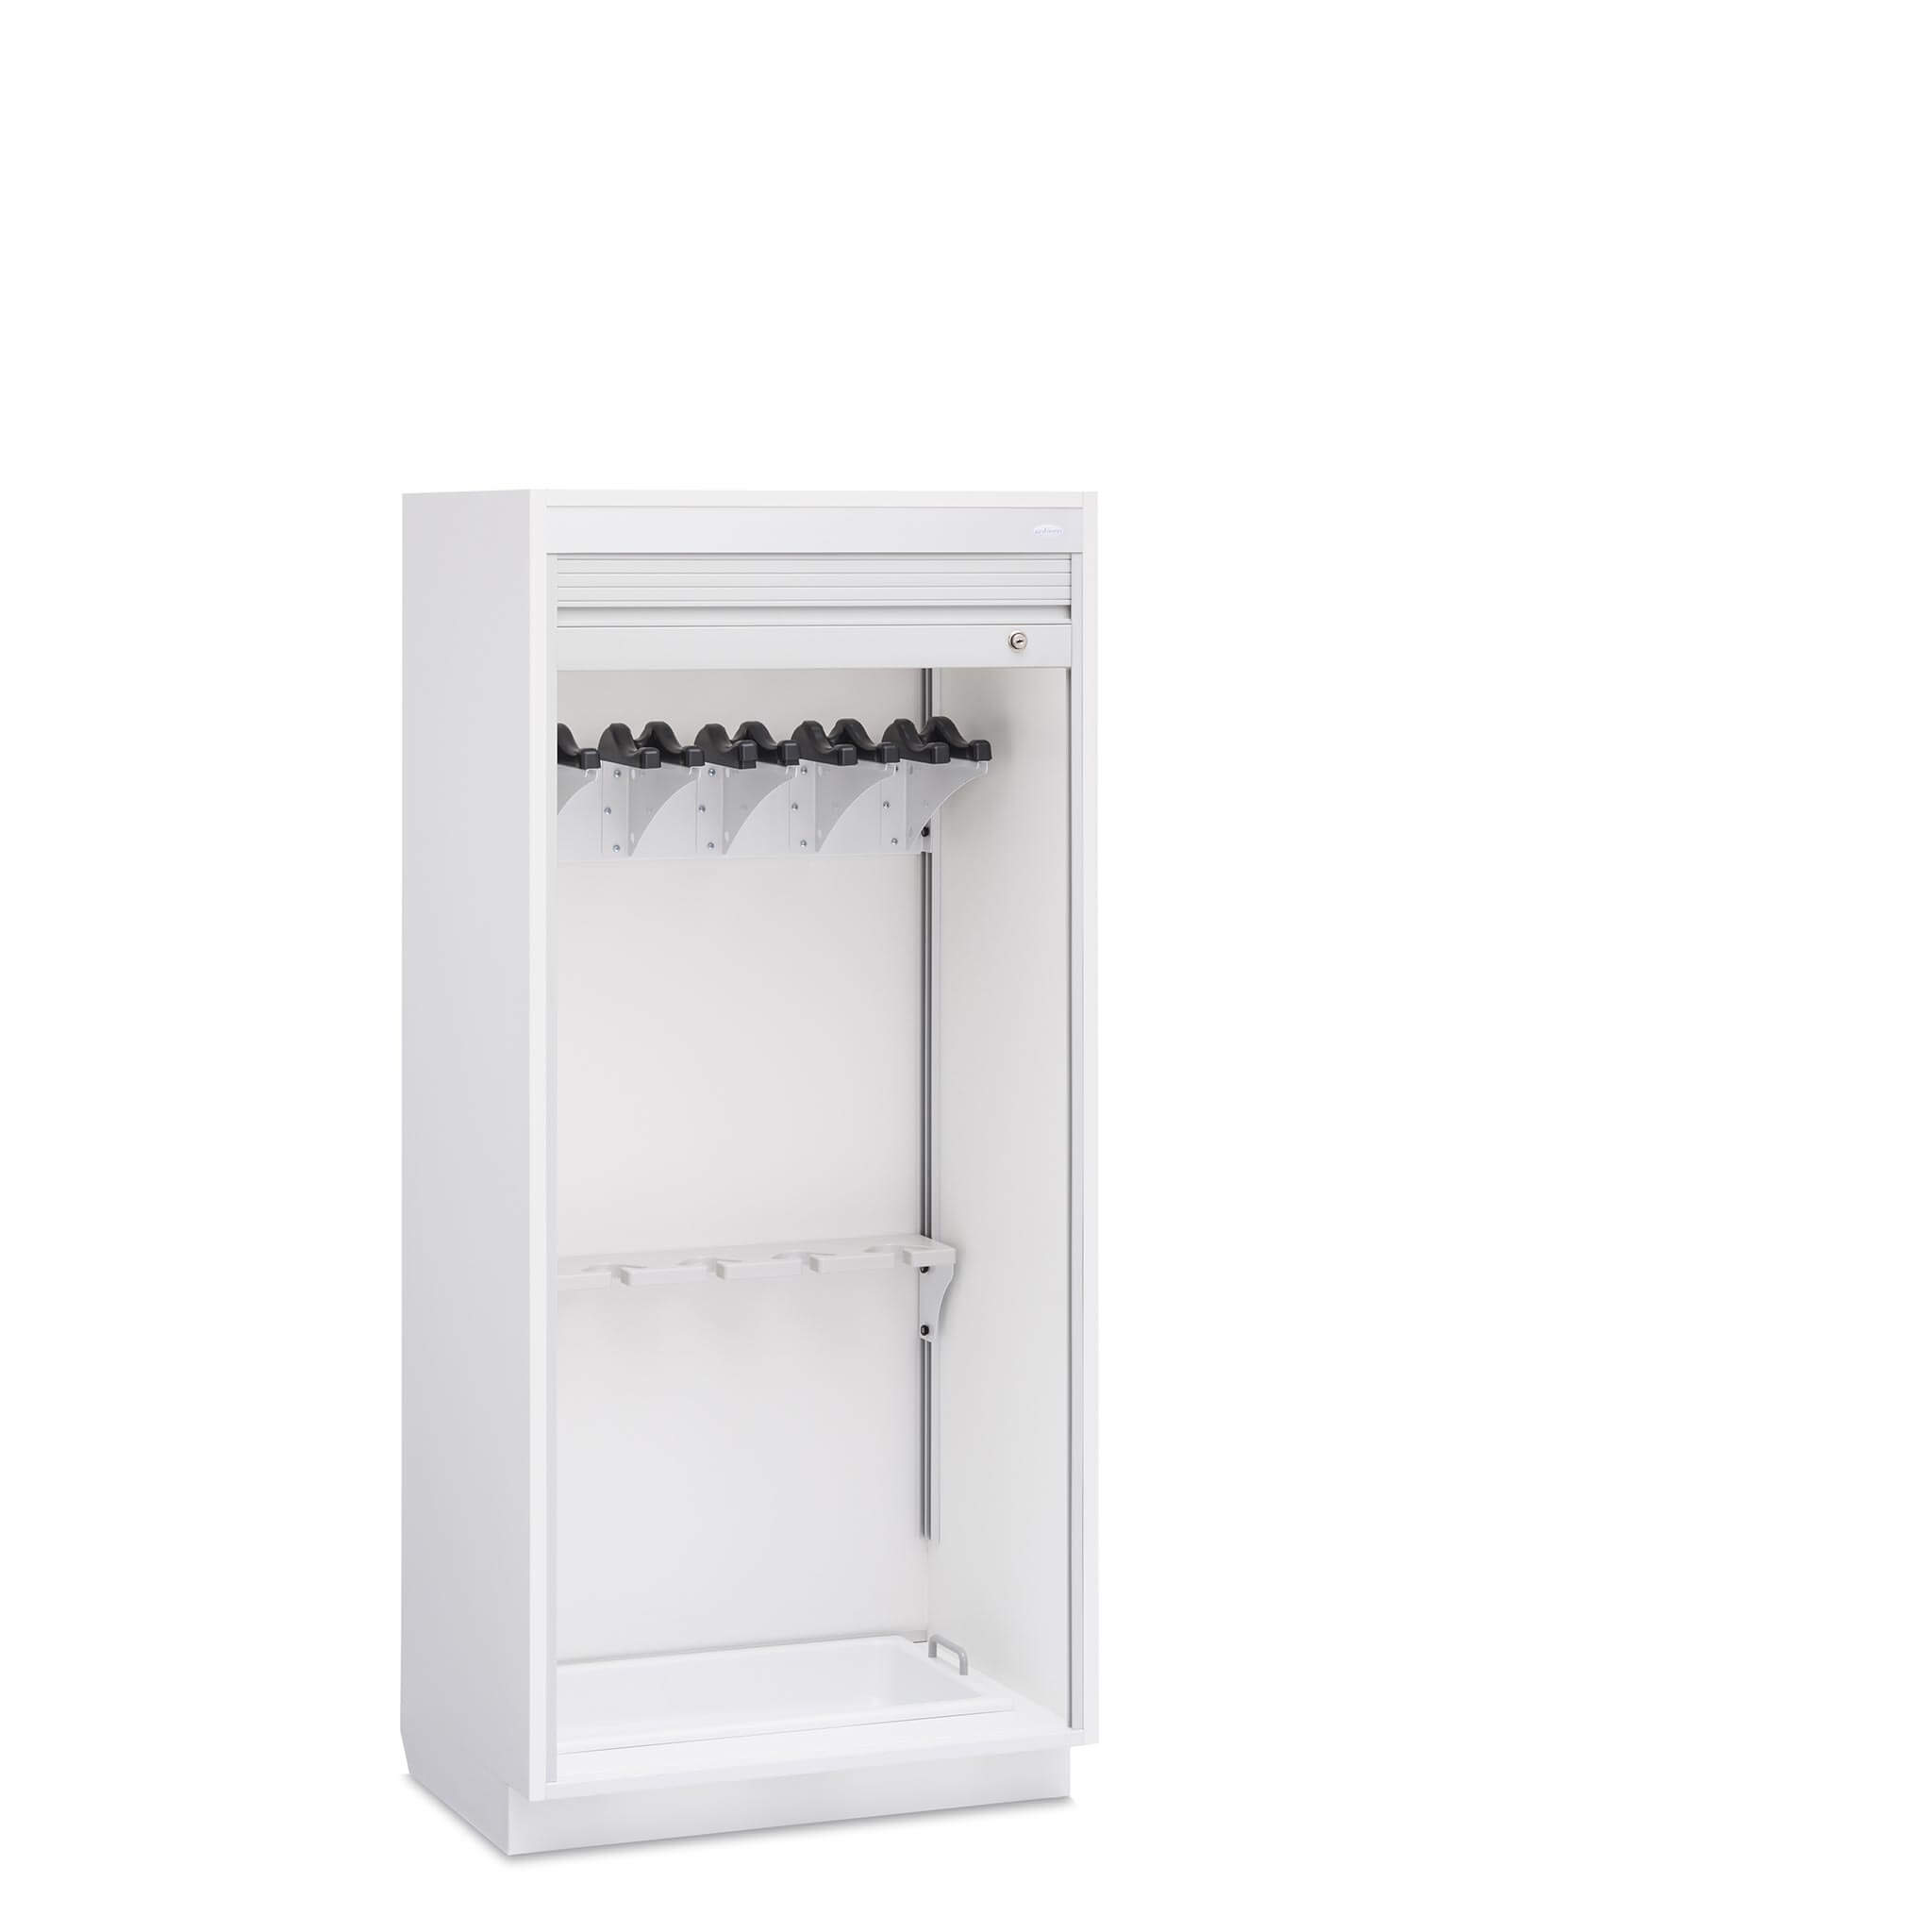 Endoscope Storage Cabinets